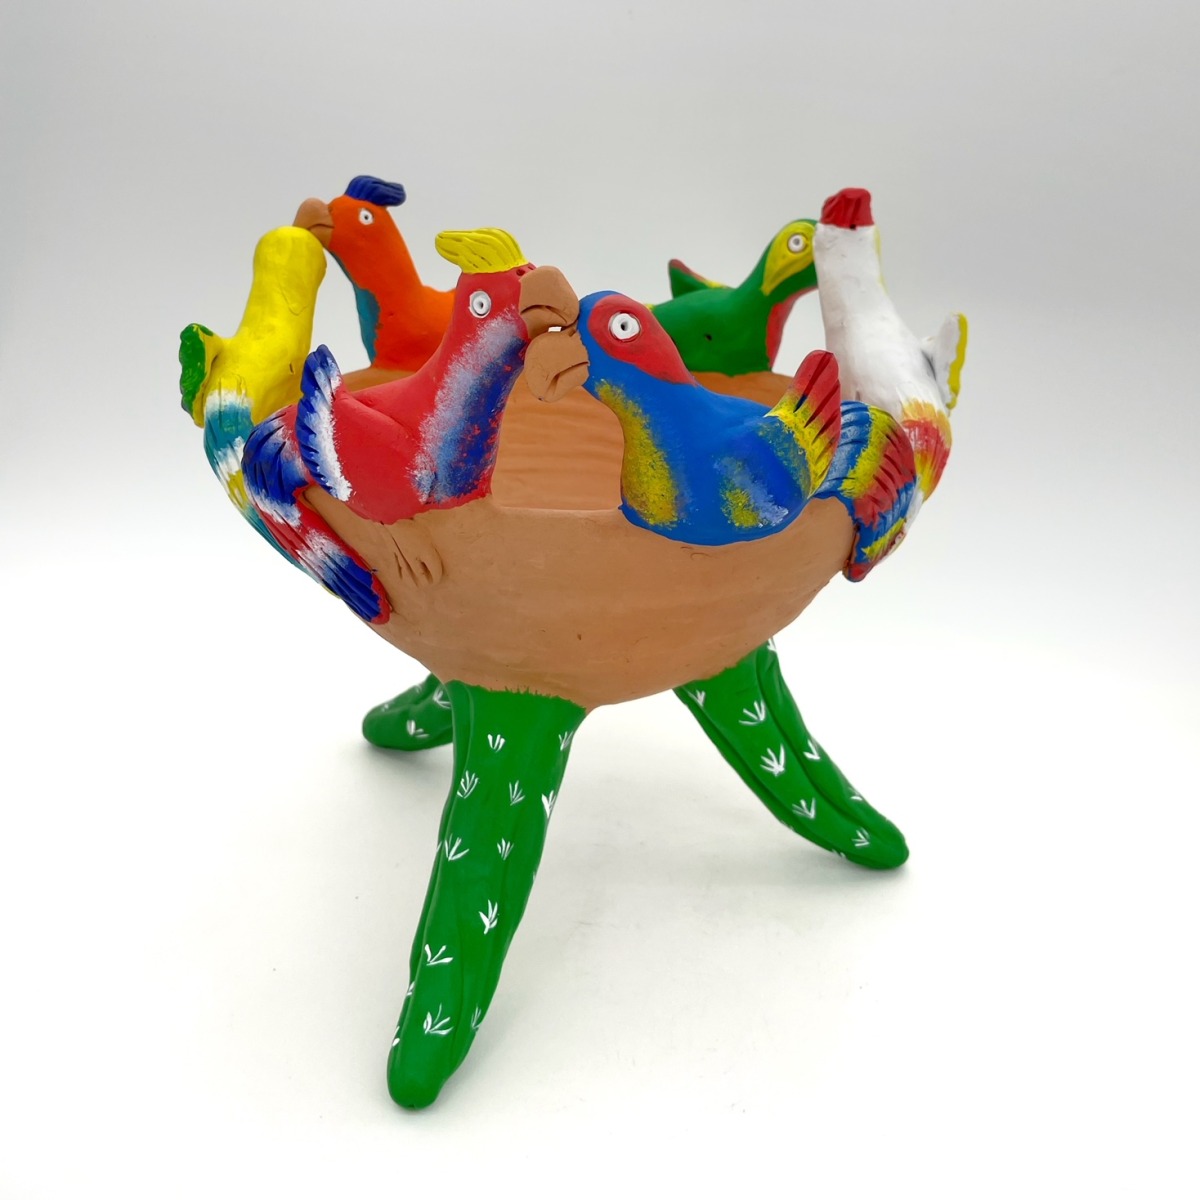 Frutero Pata ~ Ceramic Bowl with Parrots